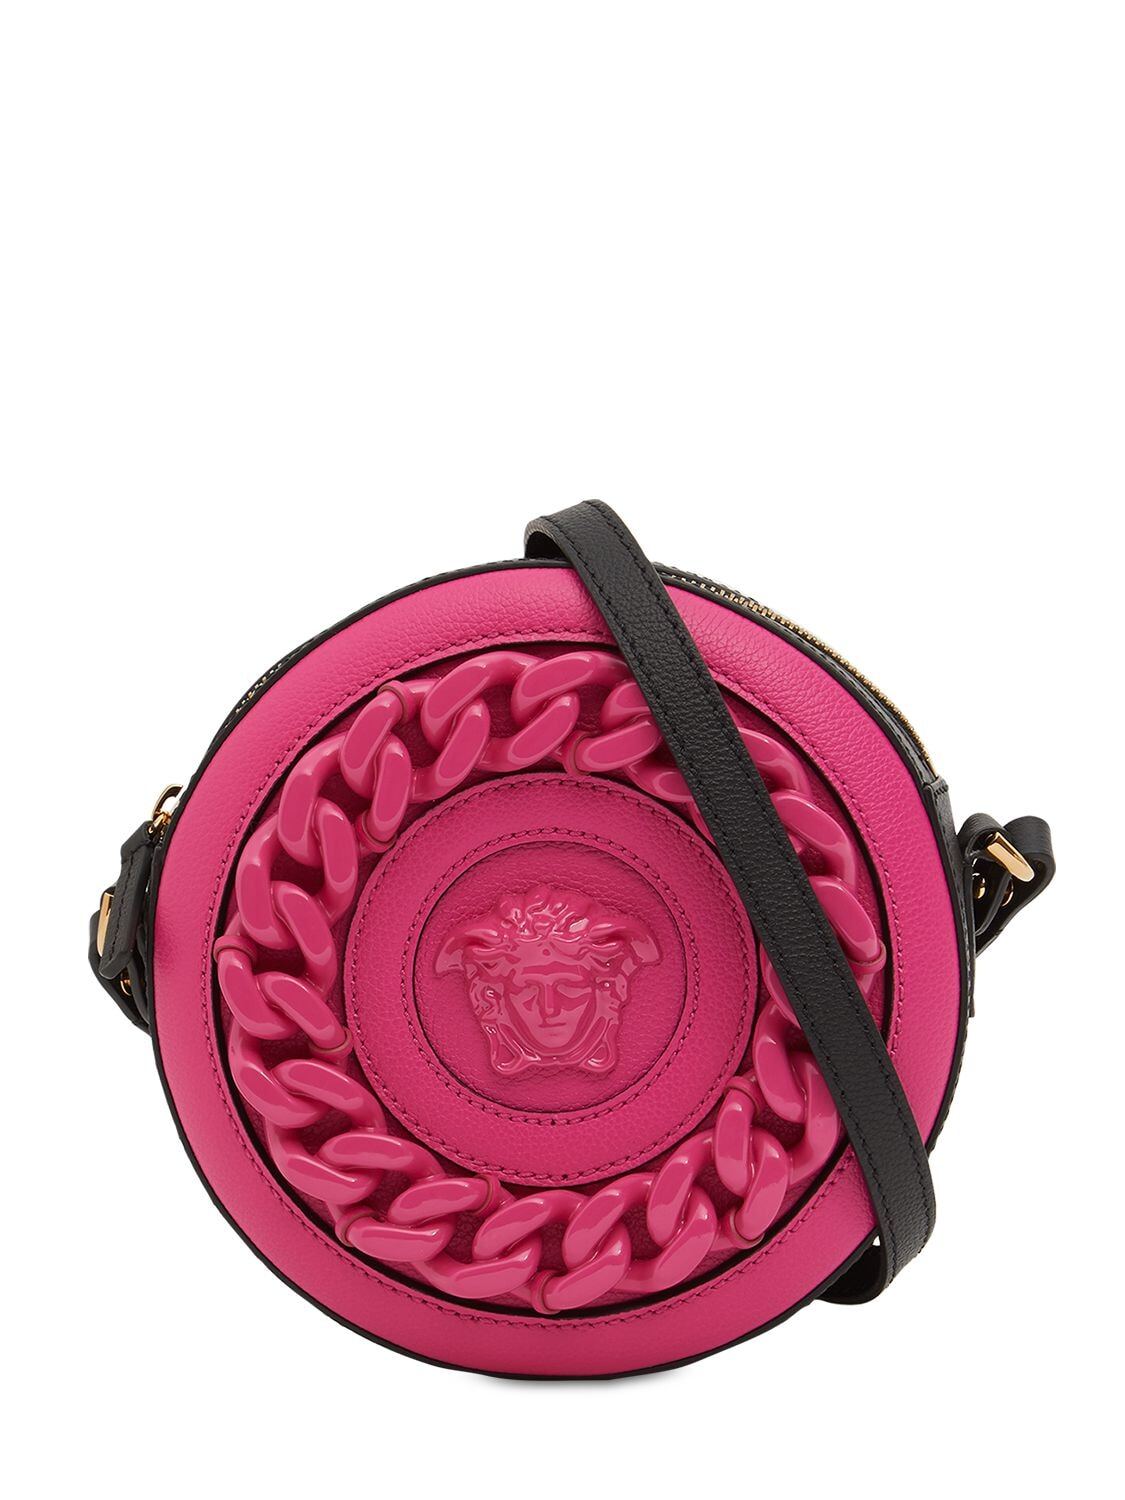 VERSACE Medusa Leather & Chain Shoulder Bag in fuchsia